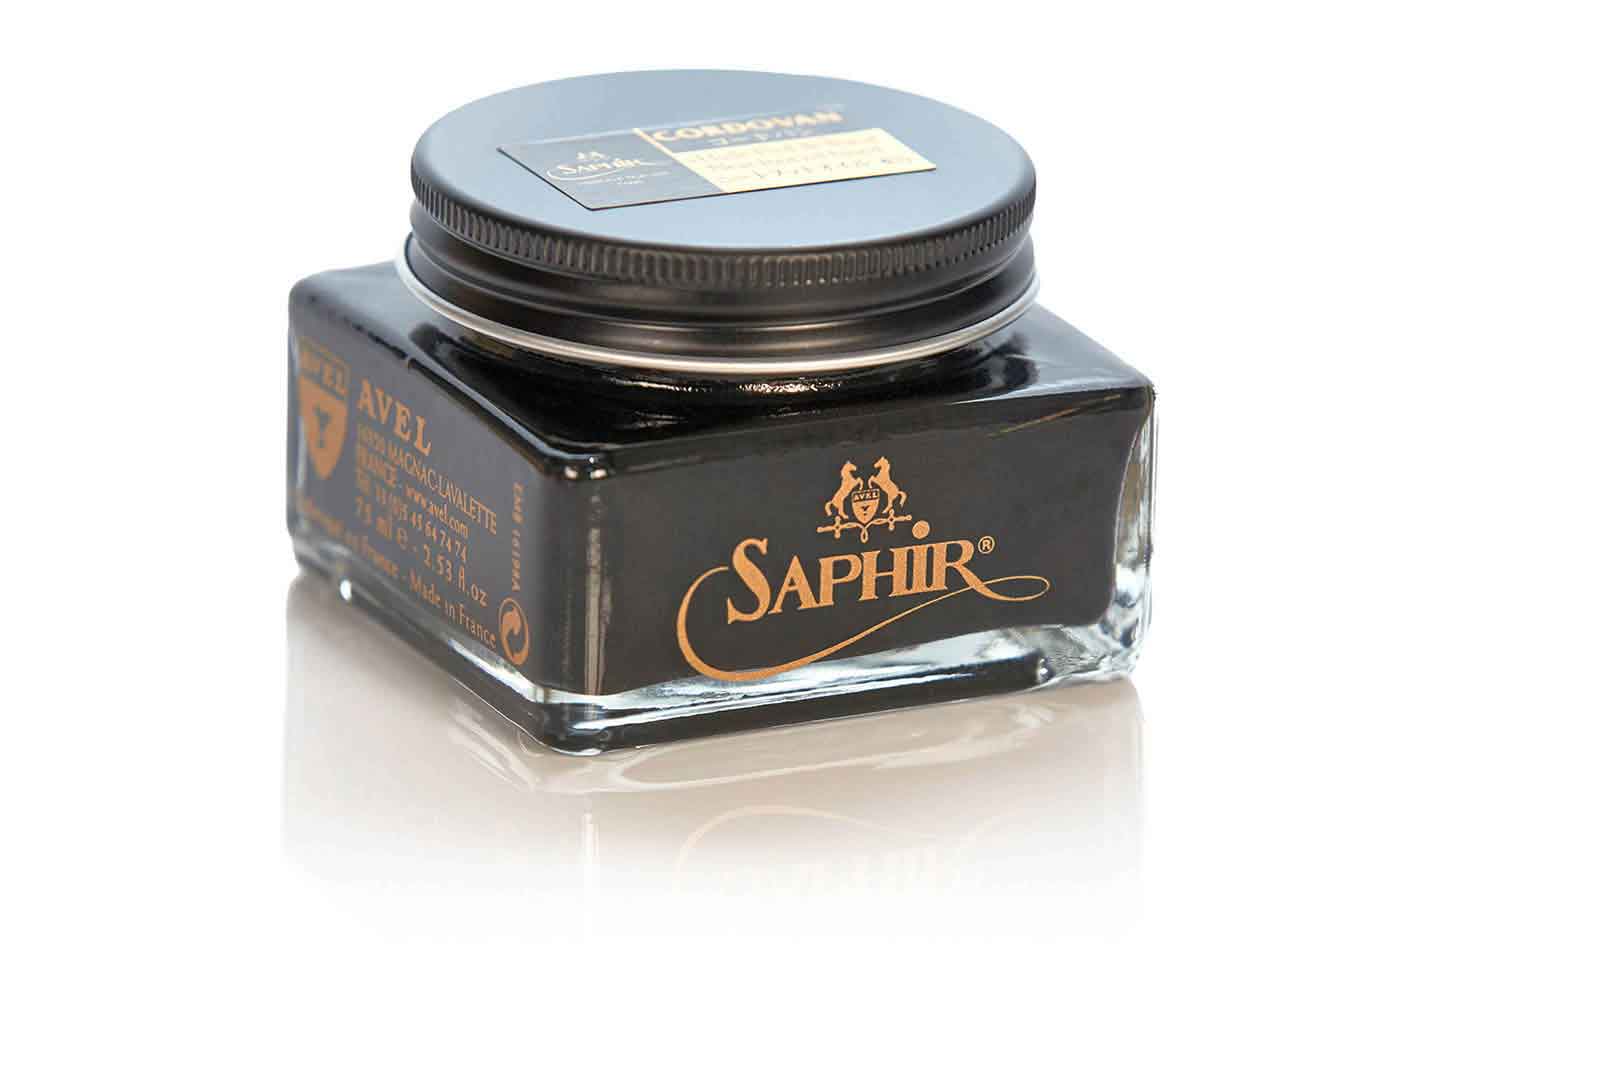 Saphir Pommadier Cream Polish Samples